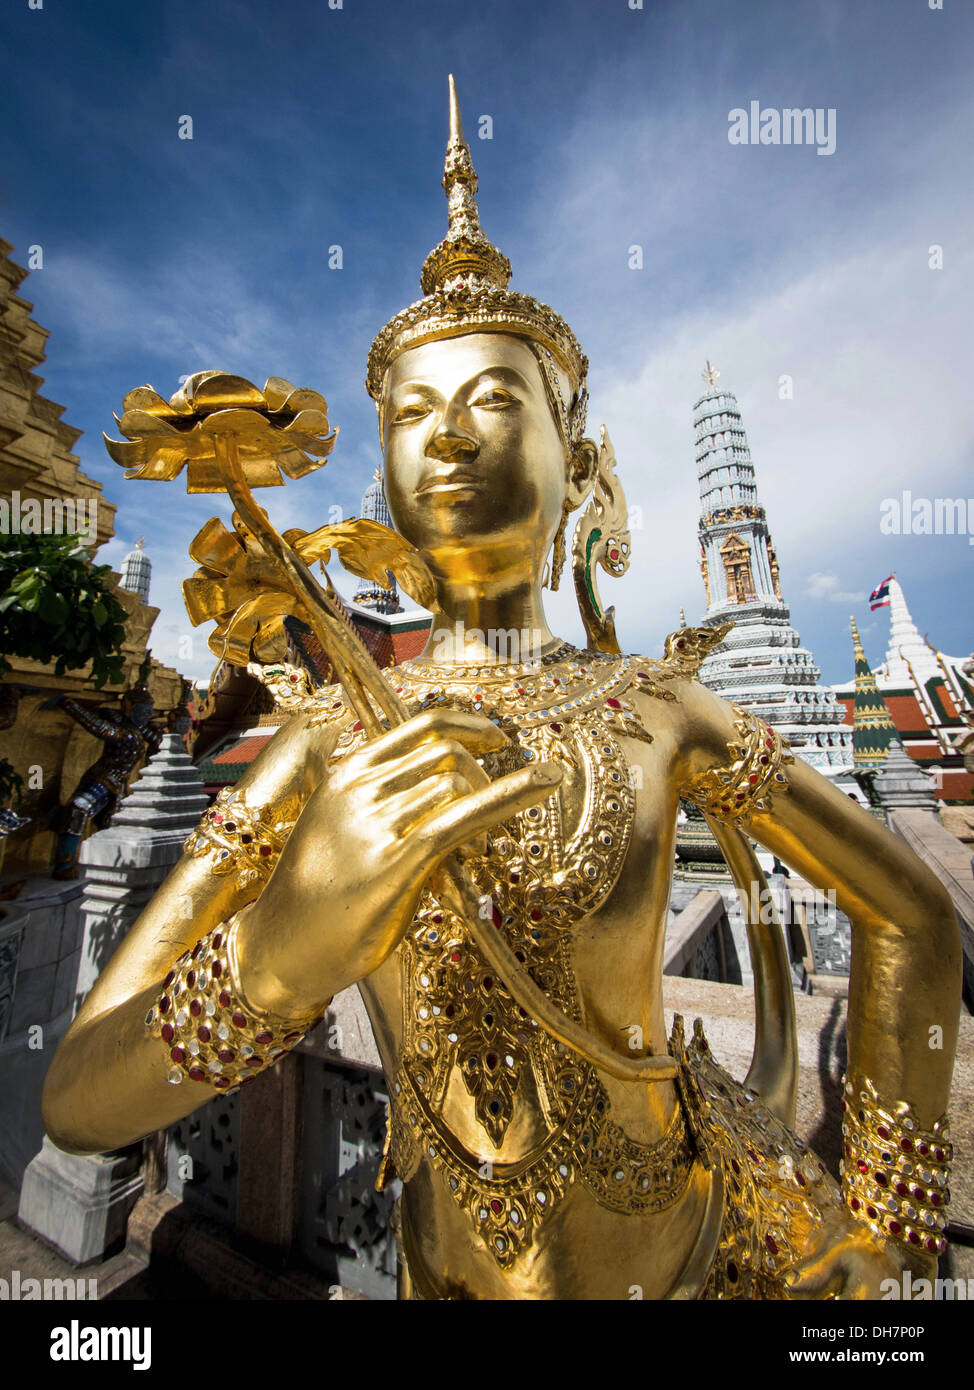 Goldene Kinnari-Statue in Bangkoks Grand Palace Komplex, Thailand. Stockfoto